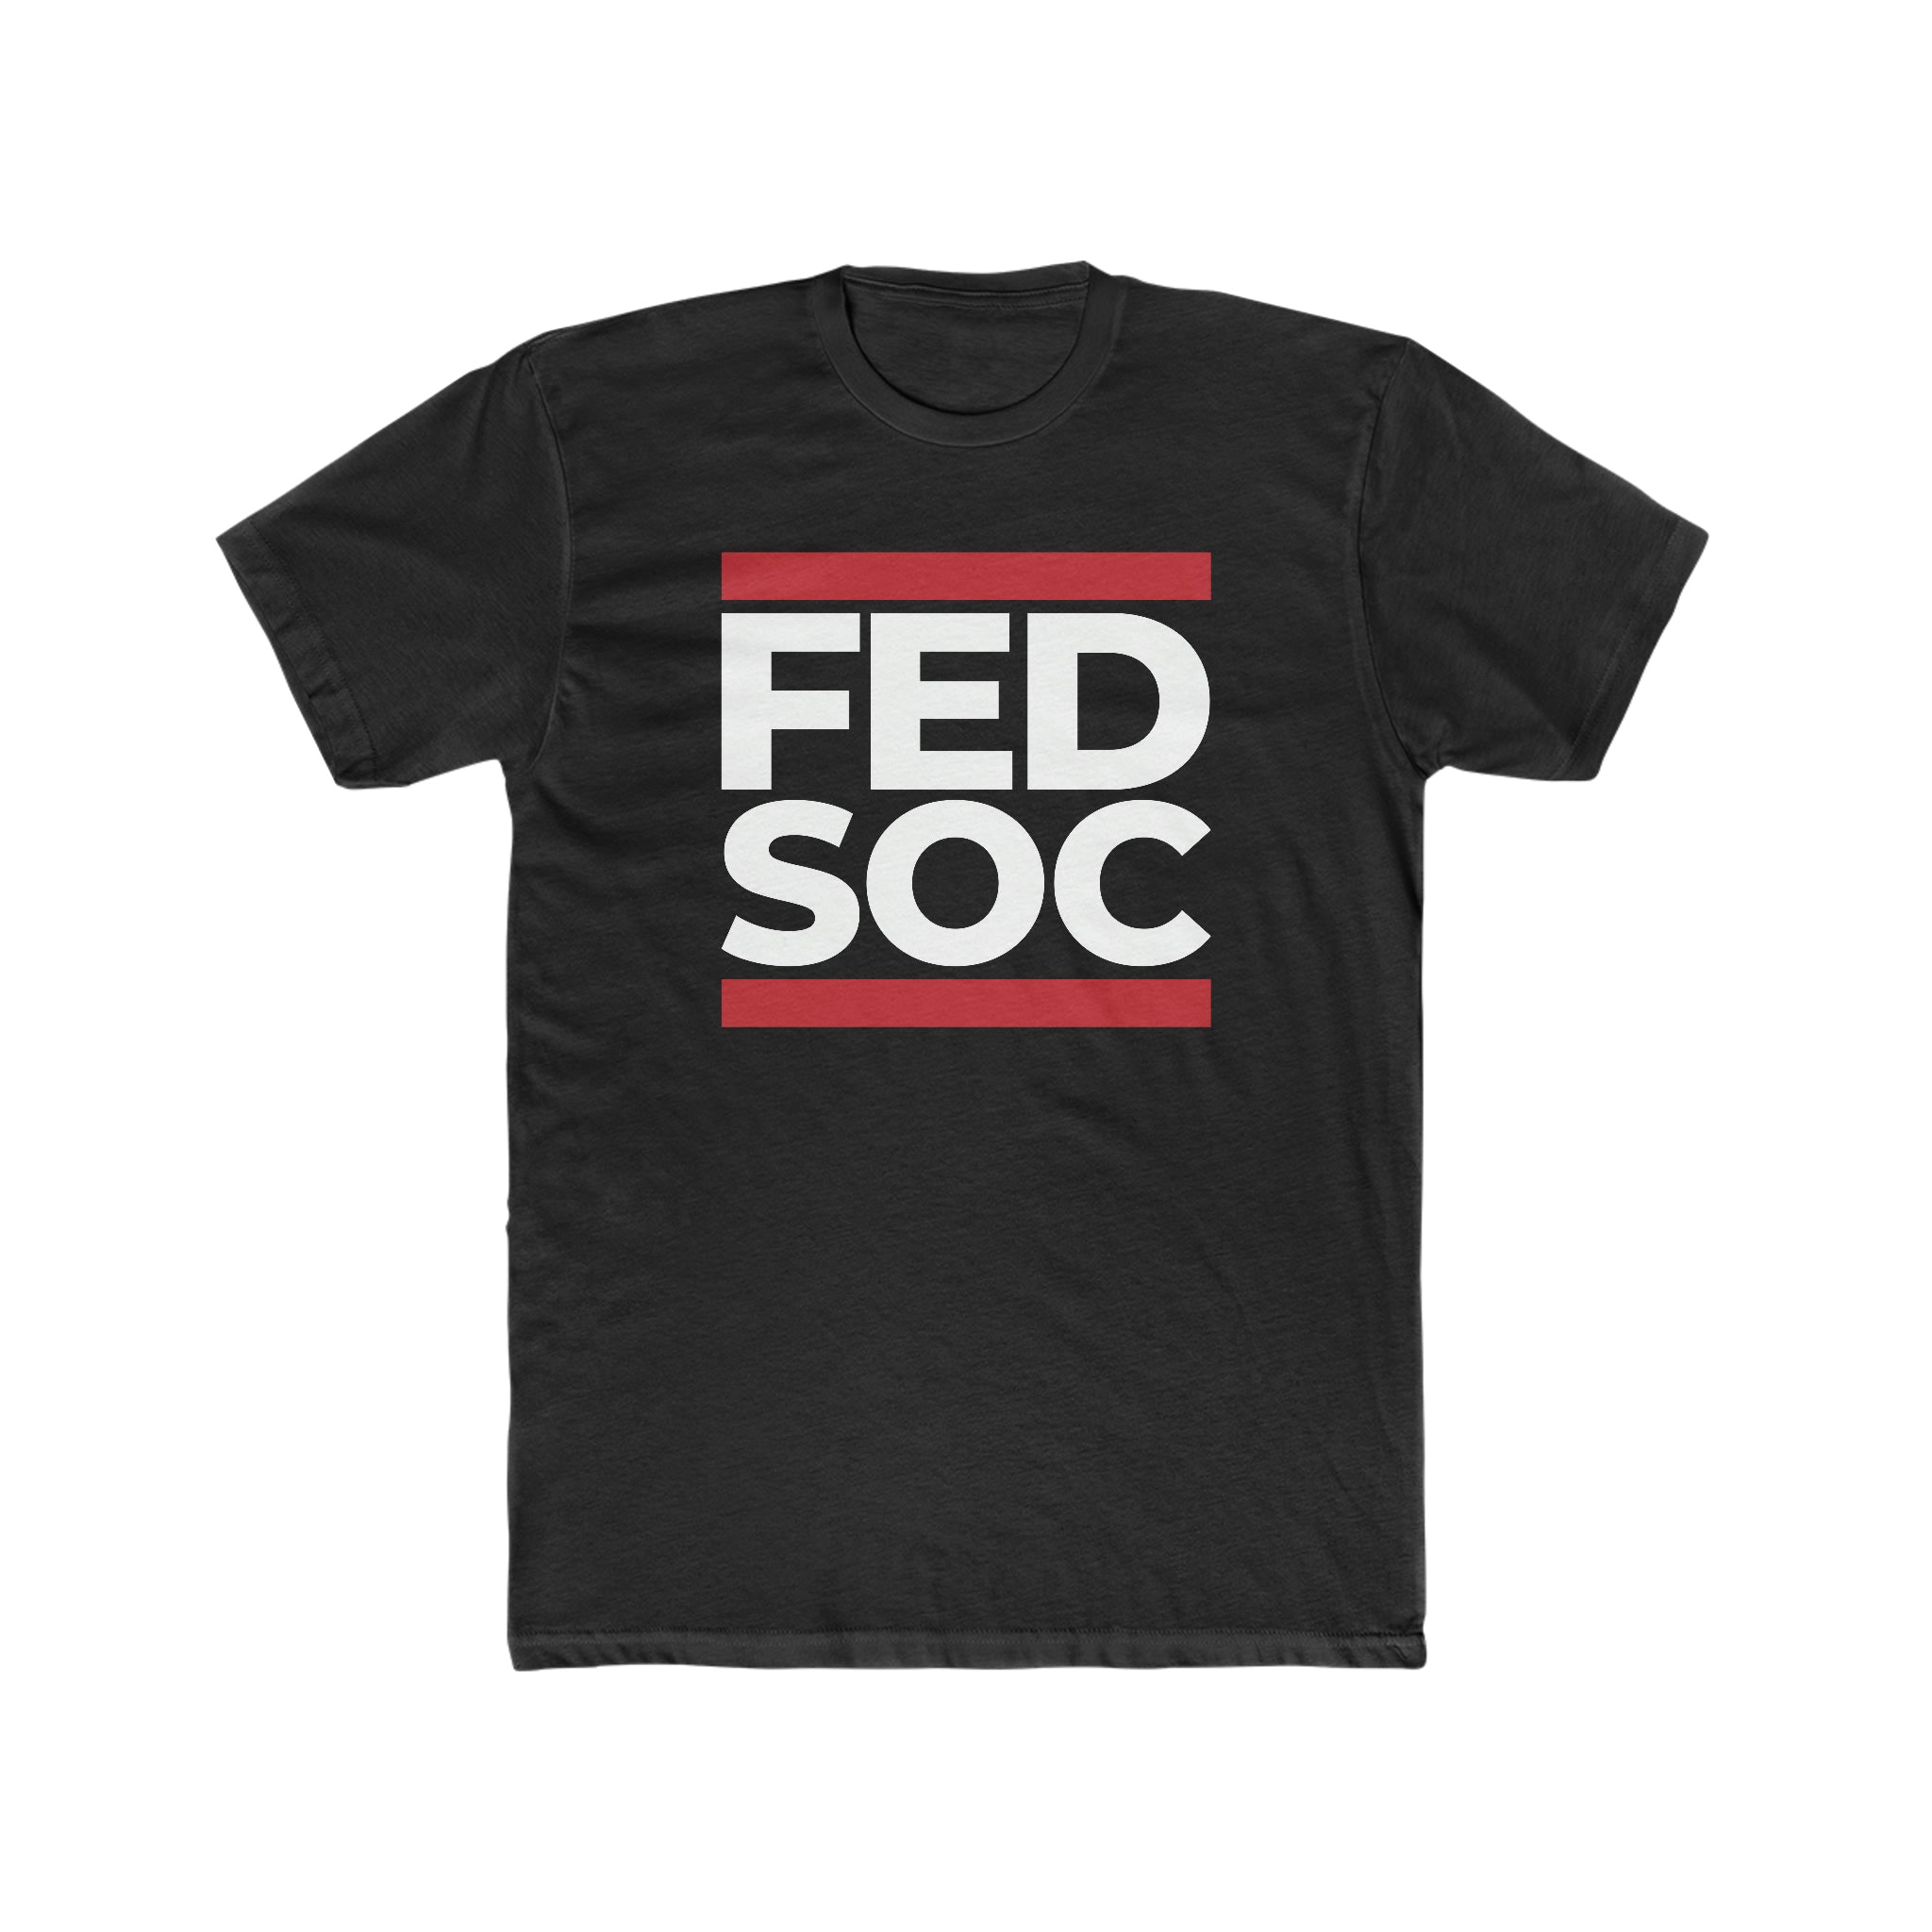 Run Fed Soc Shirt (Fed Soc)